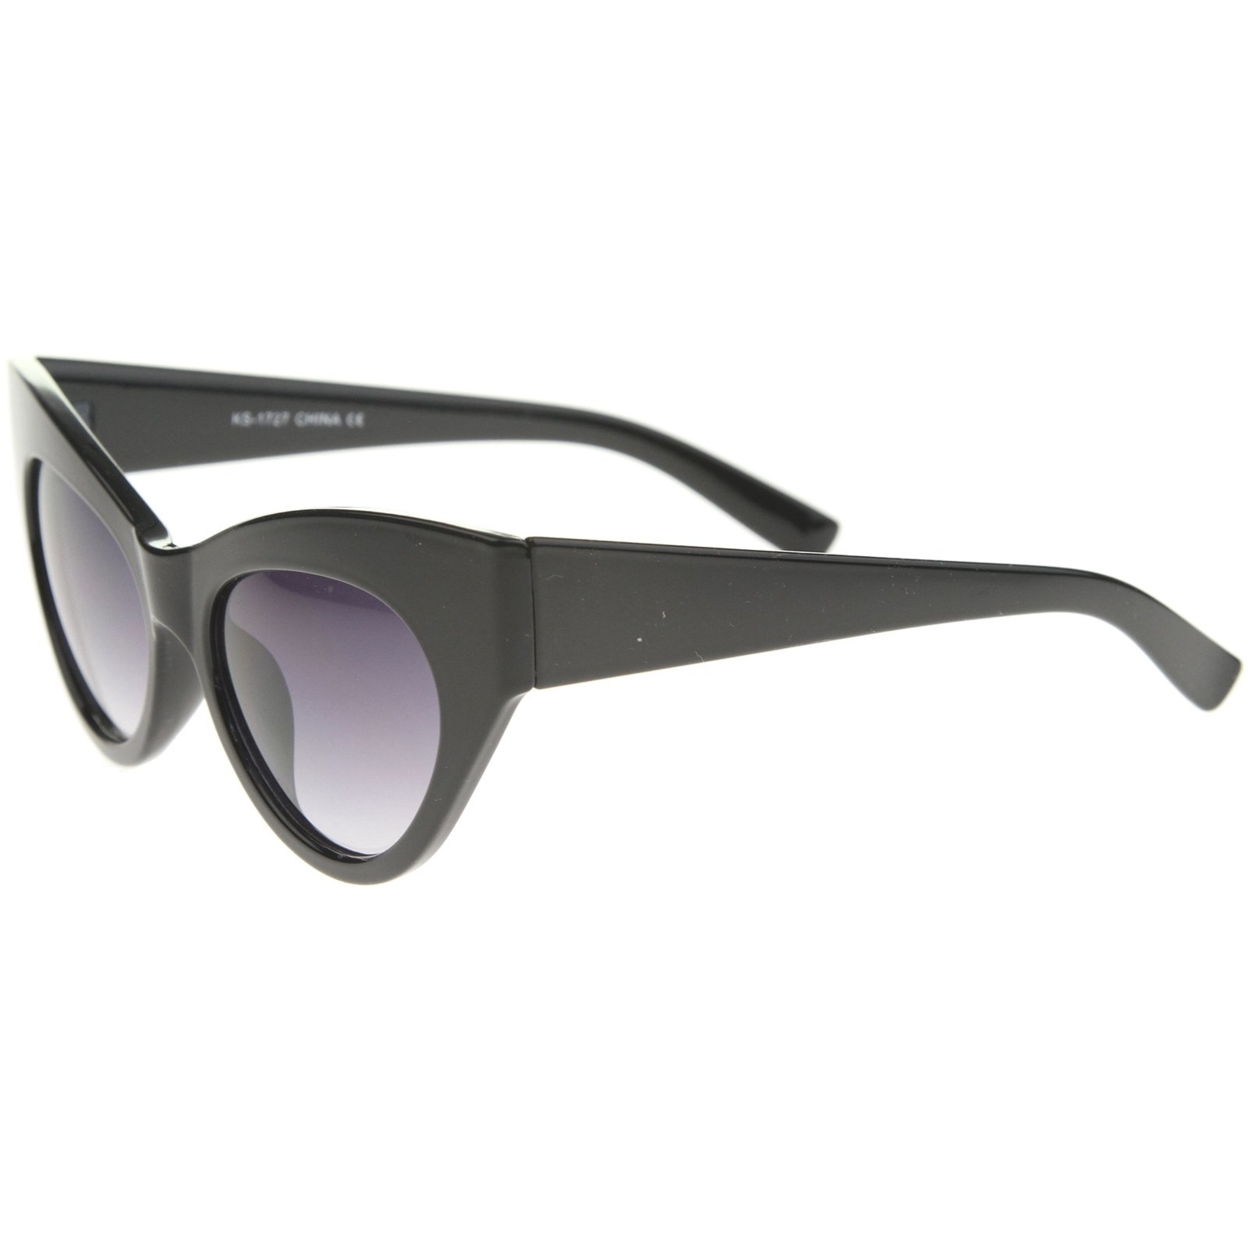 Womens High Fashion Chunky Frame Oversize Bold Cat Eye Sunglasses 57mm - Shiny Black / Lavender